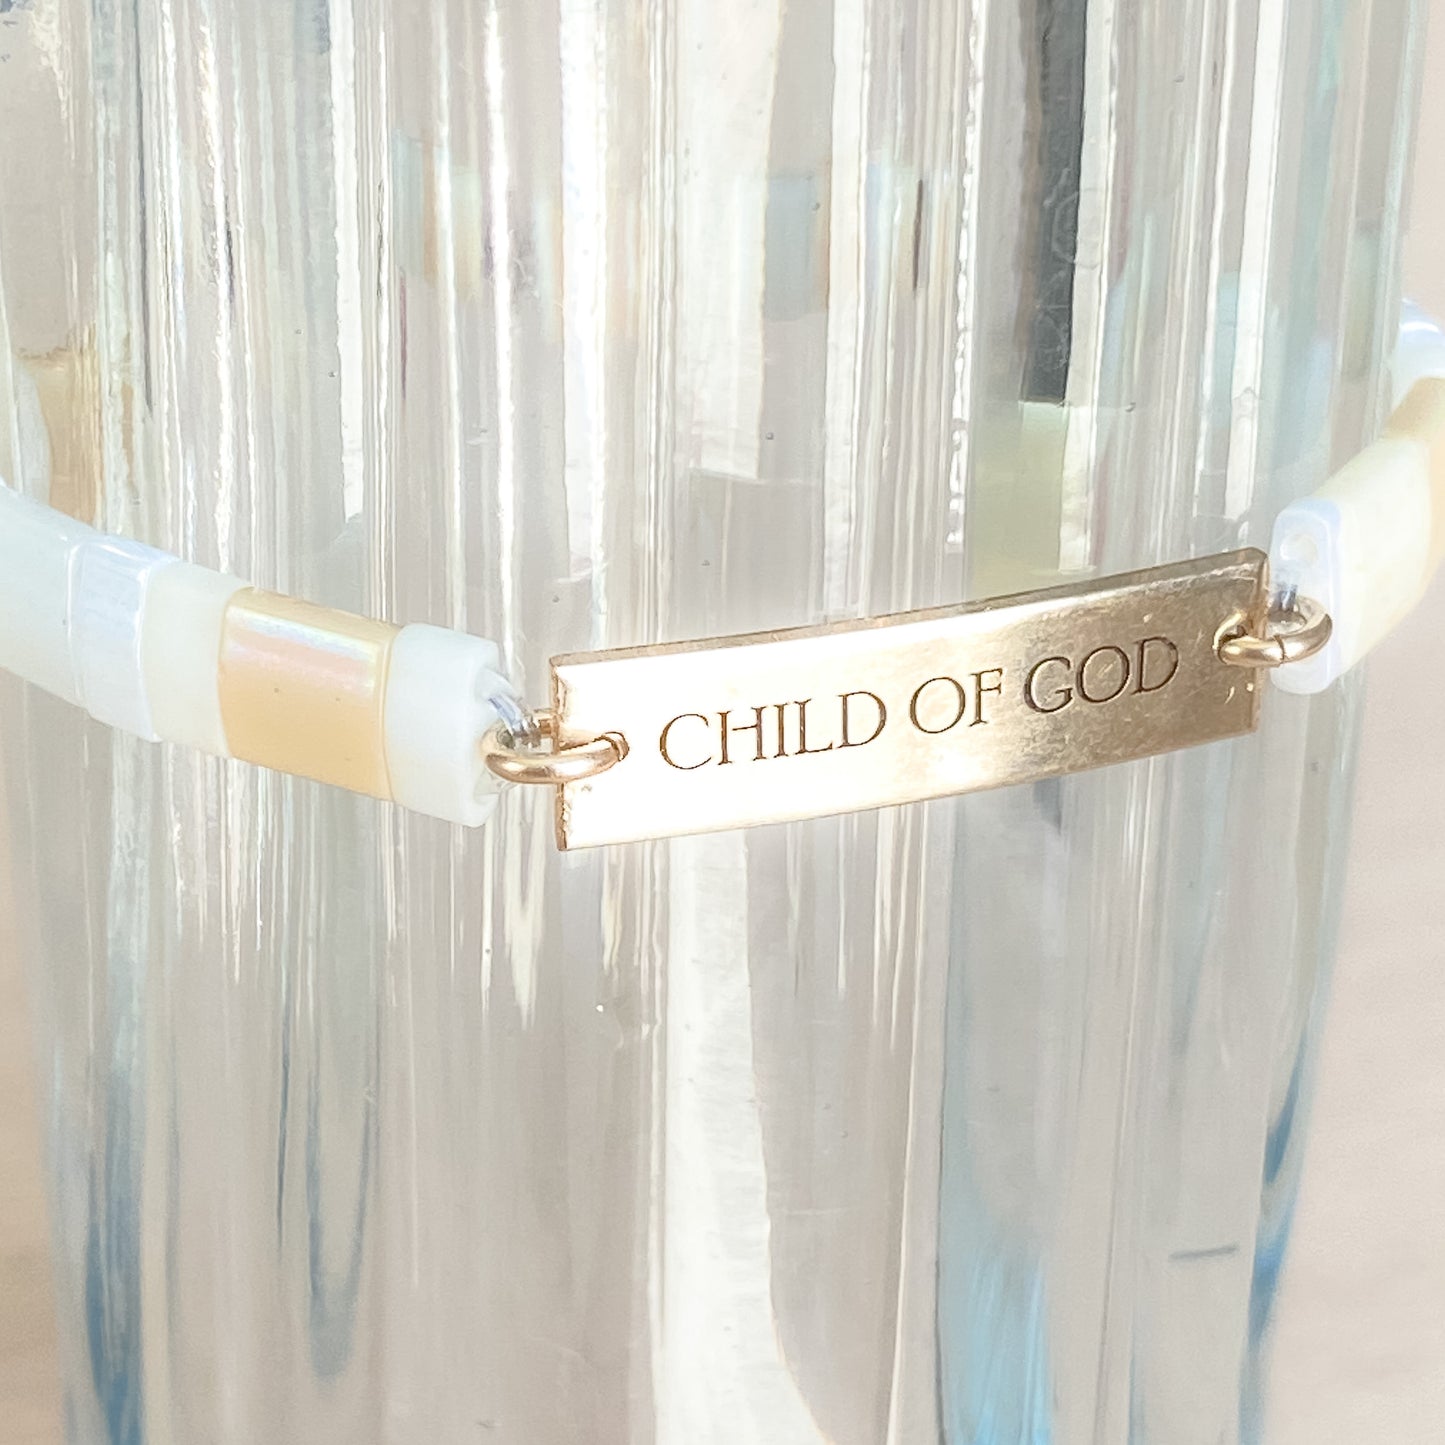 Child of God (child)